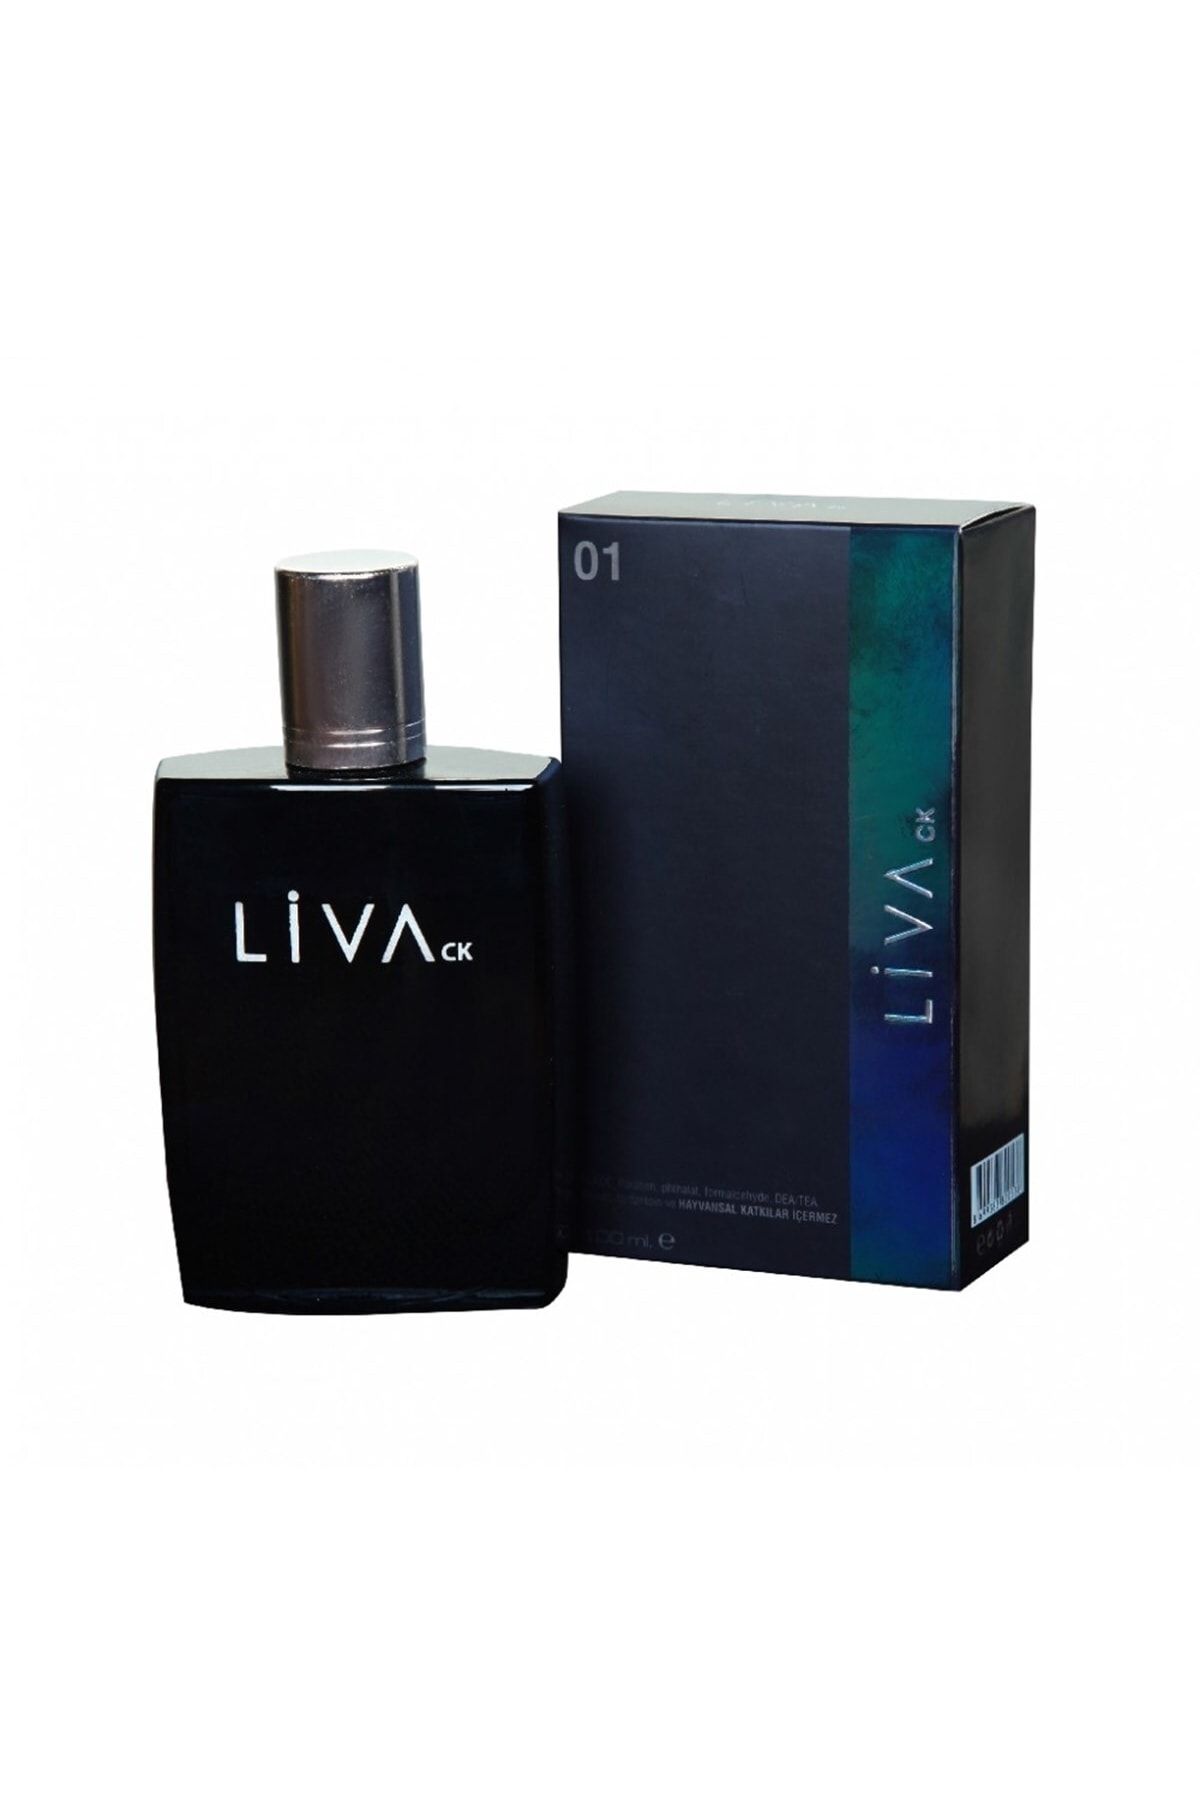 Liva - Erkek Parfüm 01